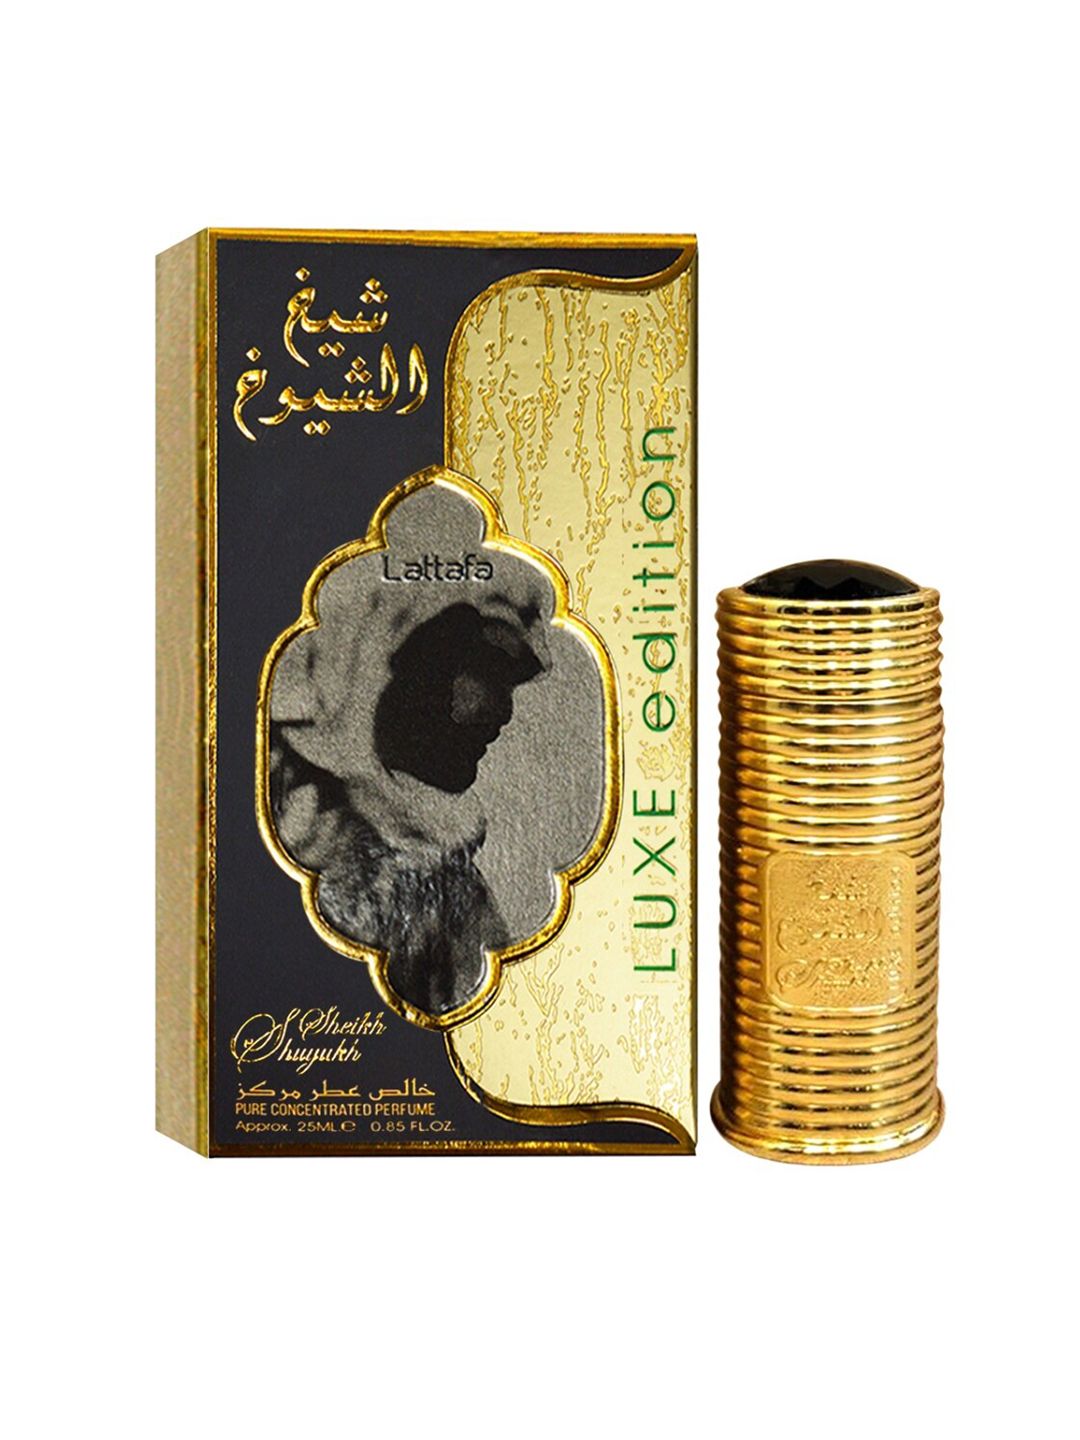 Lattafa Sheikh Al Shuyukh Luxe Edition Imported Long Lasting Eau De Parfum Attar 25 ml Price in India